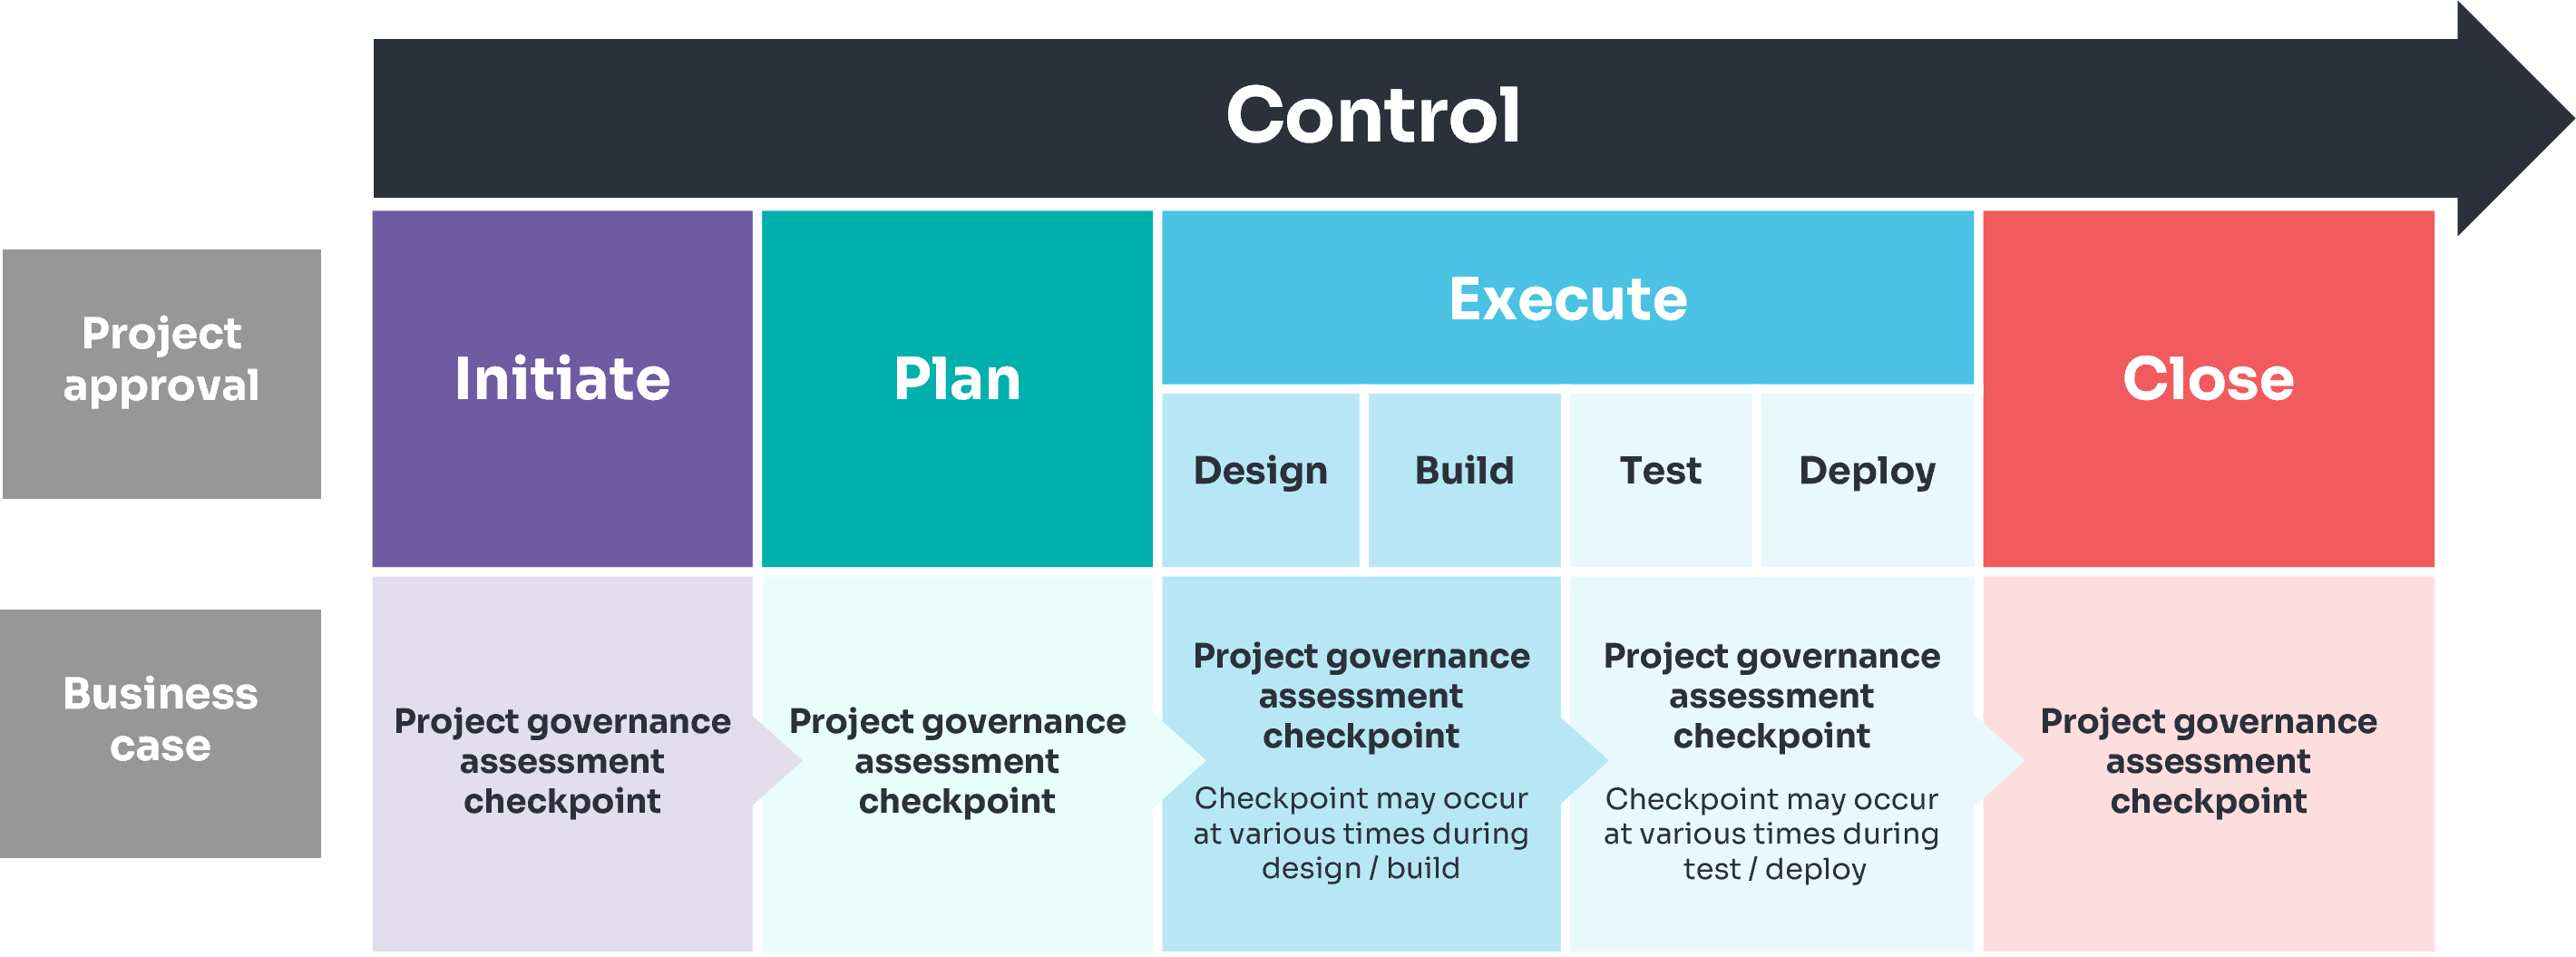 Project governance assessment process